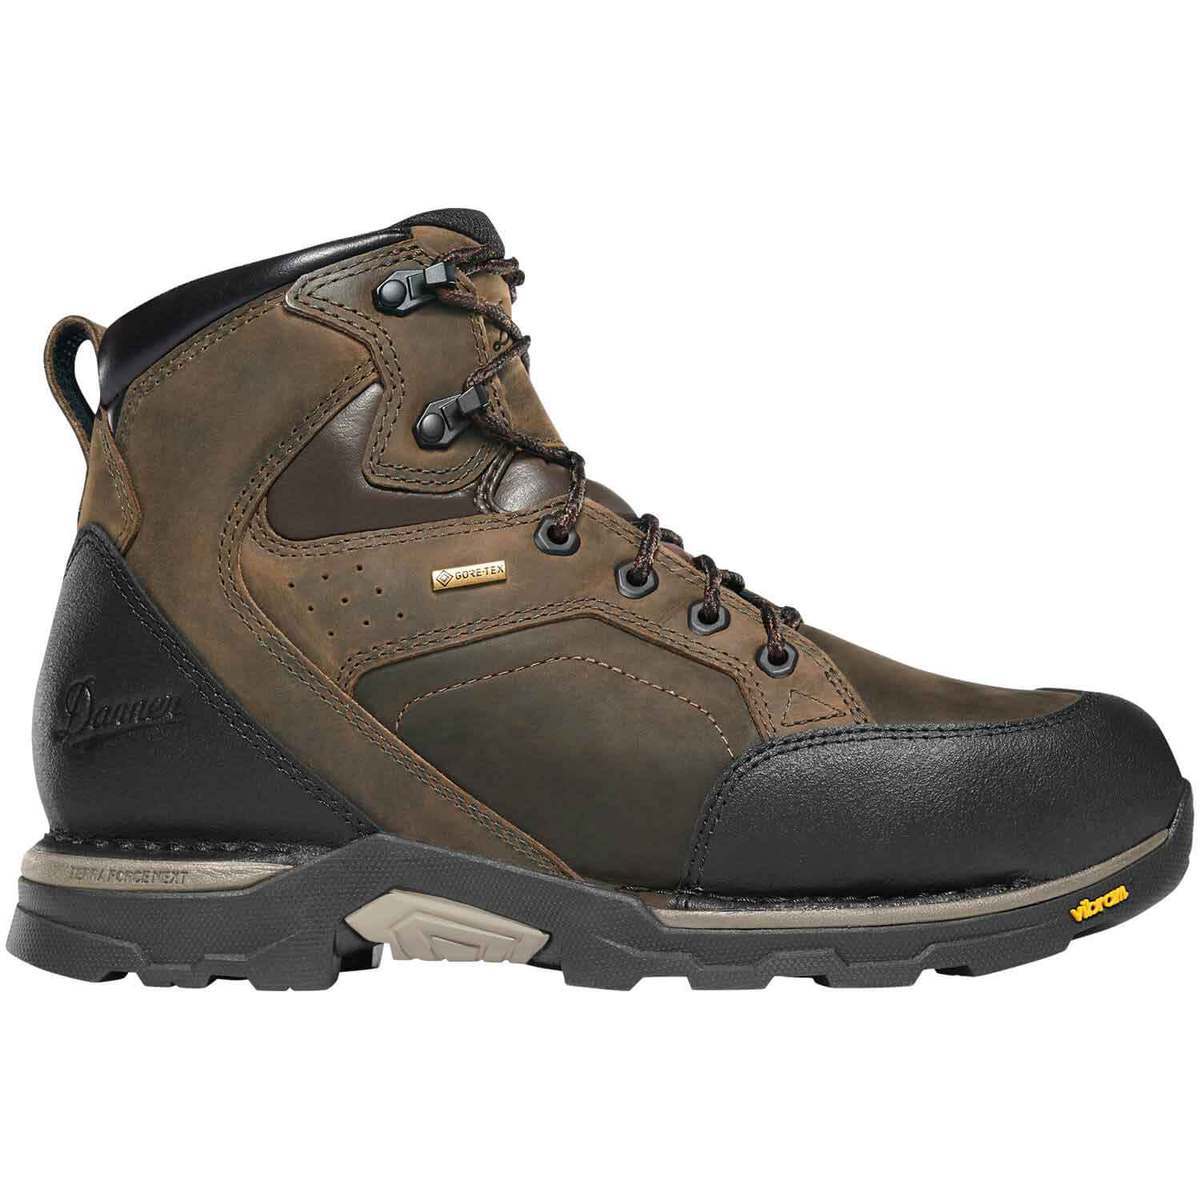 Danner Men's Crucial Composite Toe Work Boots - Brown - Size 13 EE ...